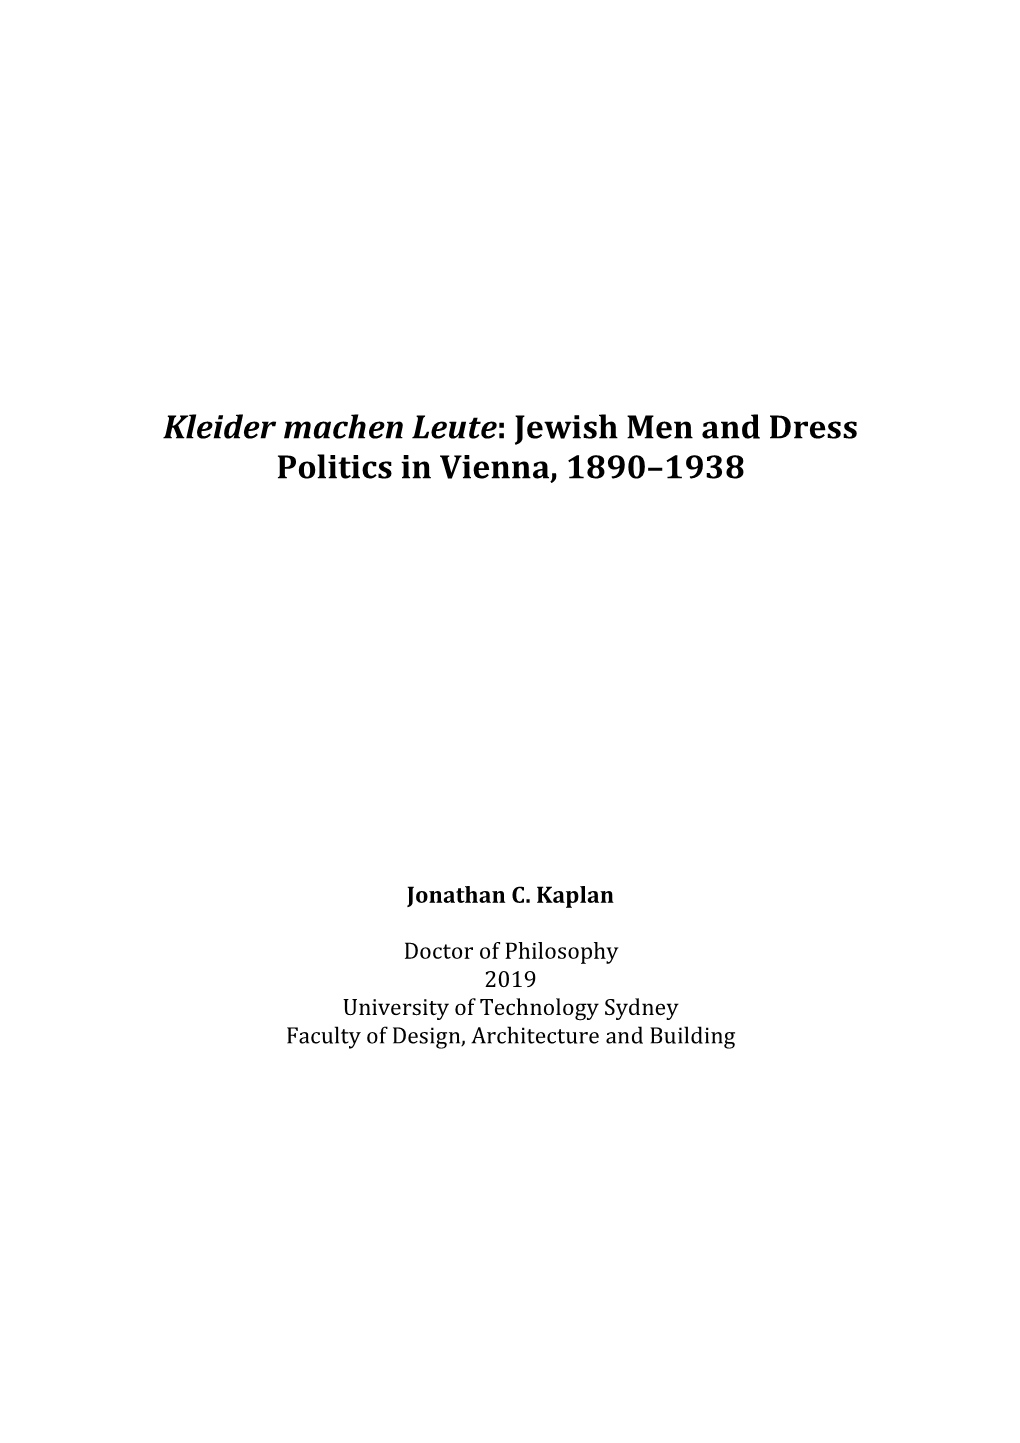 Jewish Men and Dress Politics in Vienna, 1890–1938